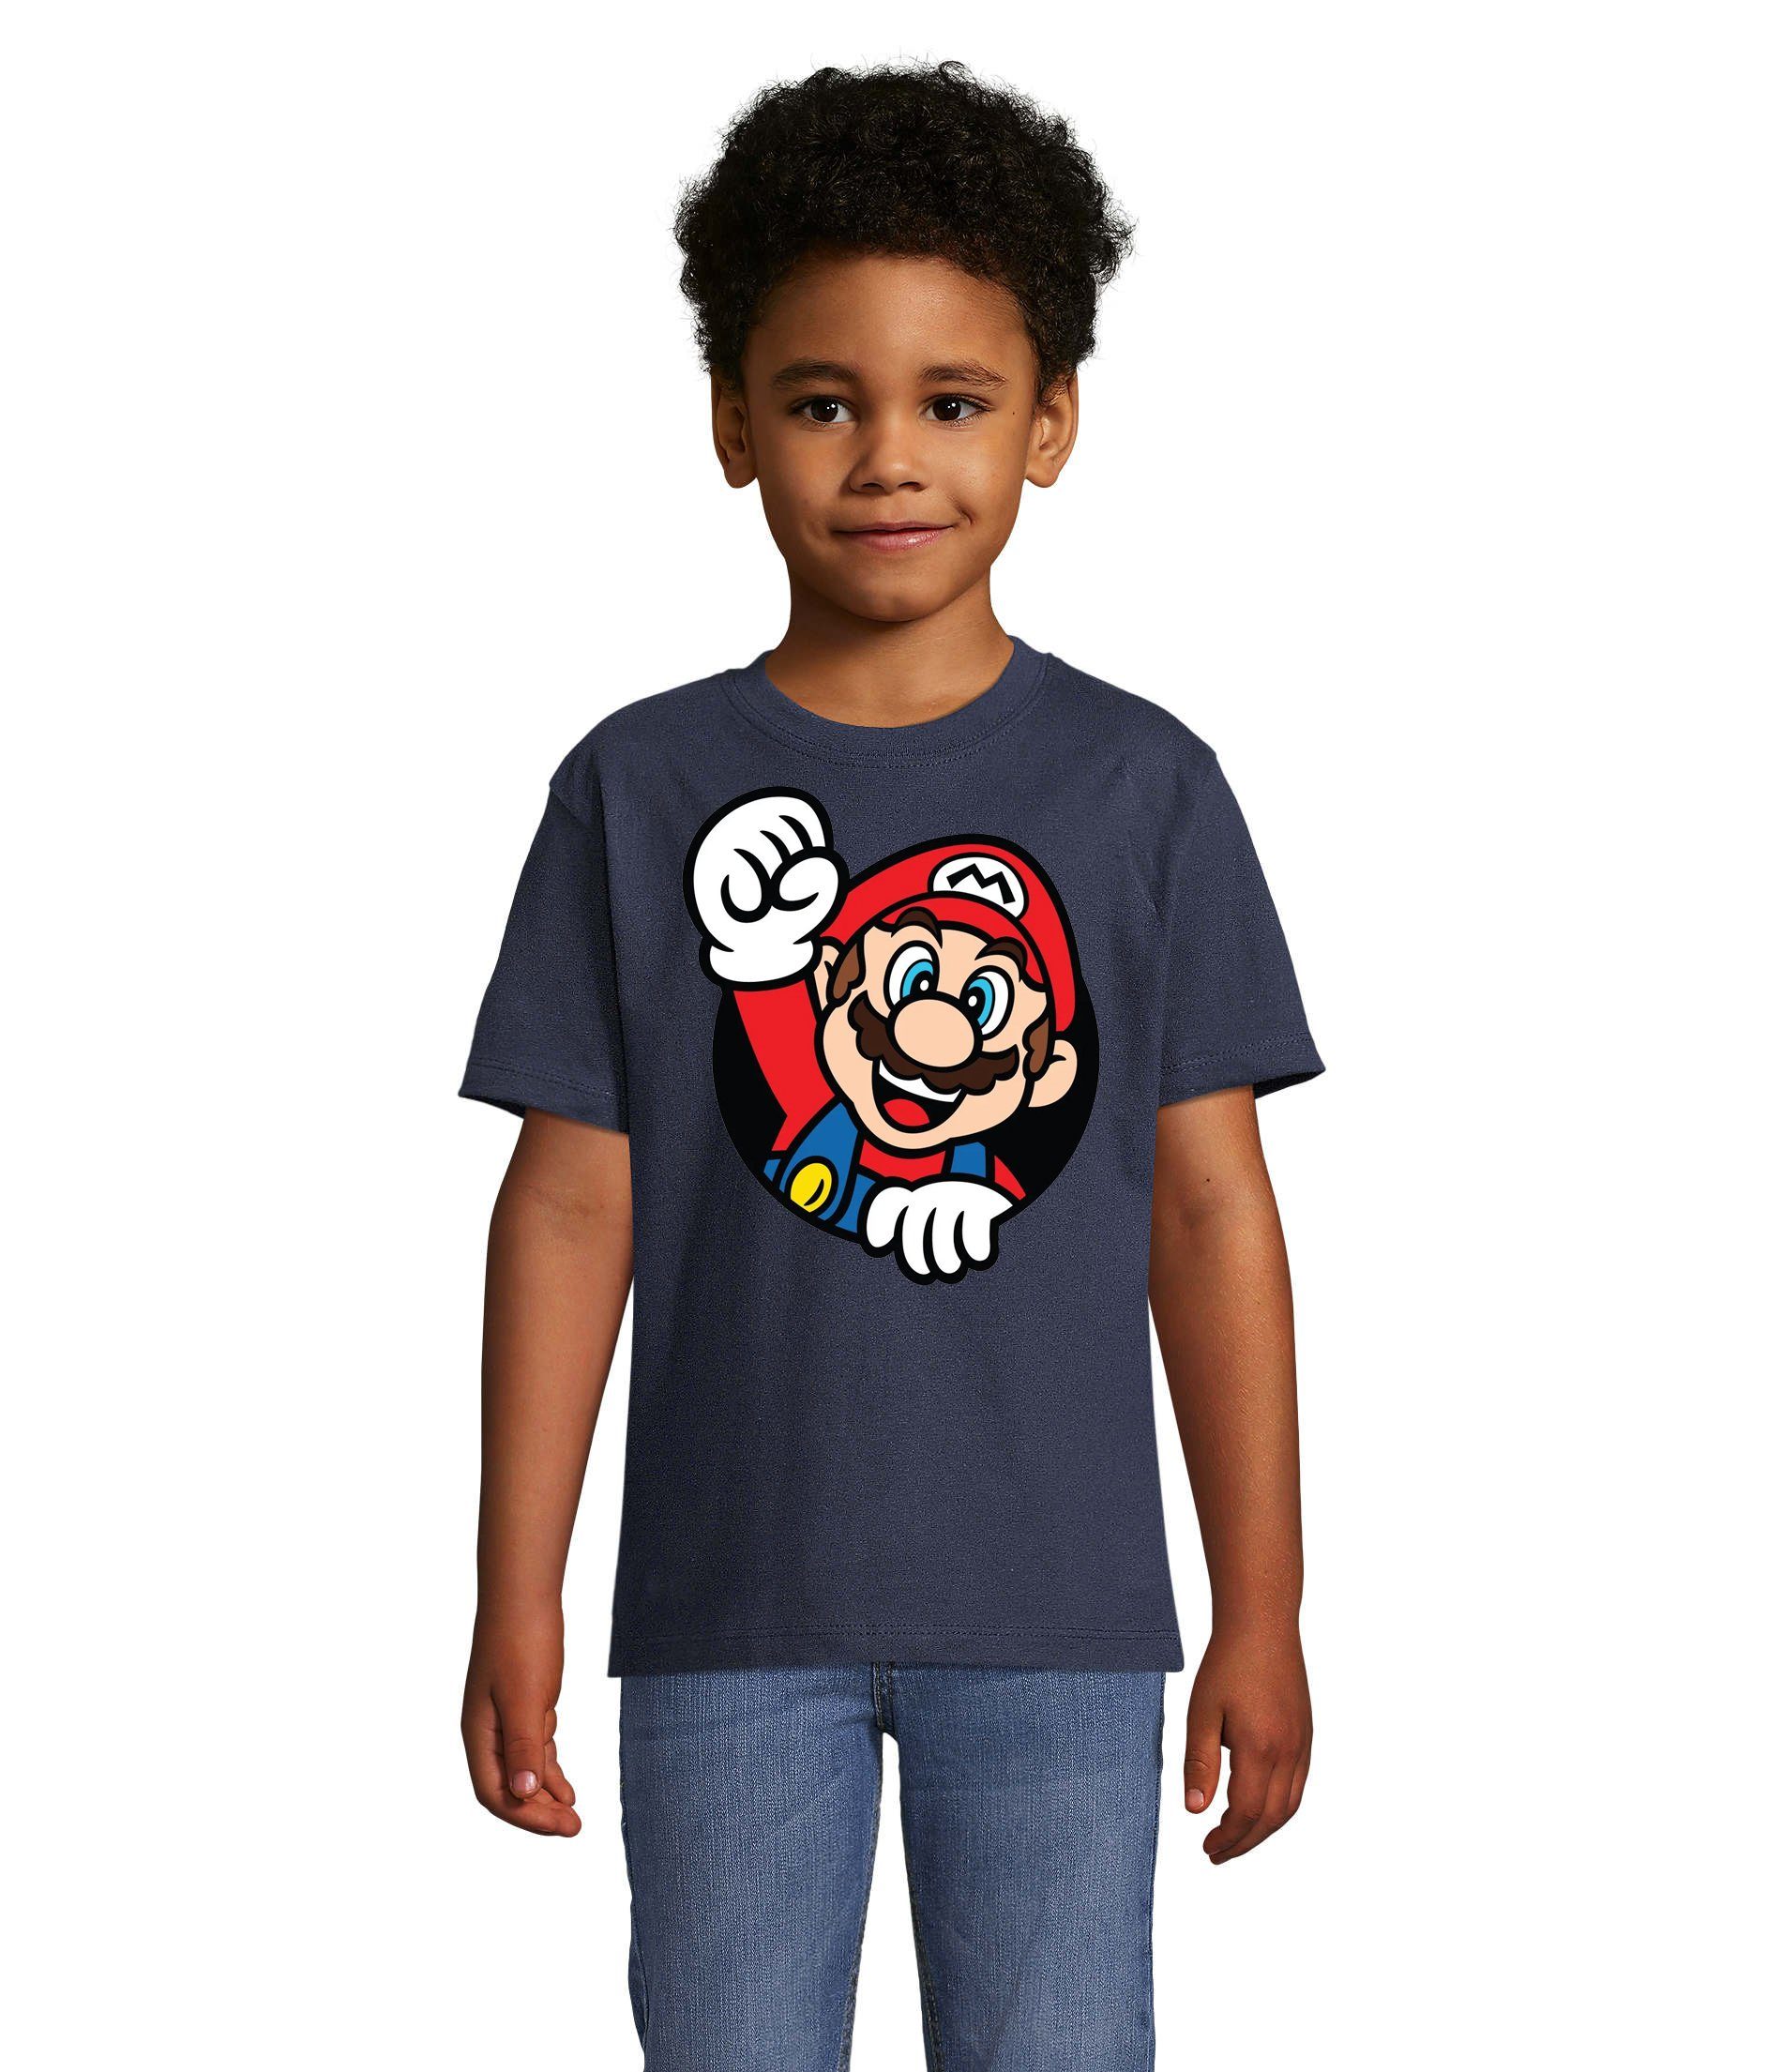 Blondie & Brownie T-Shirt Kinder Super Mario Faust Nerd Konsole Gaming Spiel Nintendo Konsole Navyblau